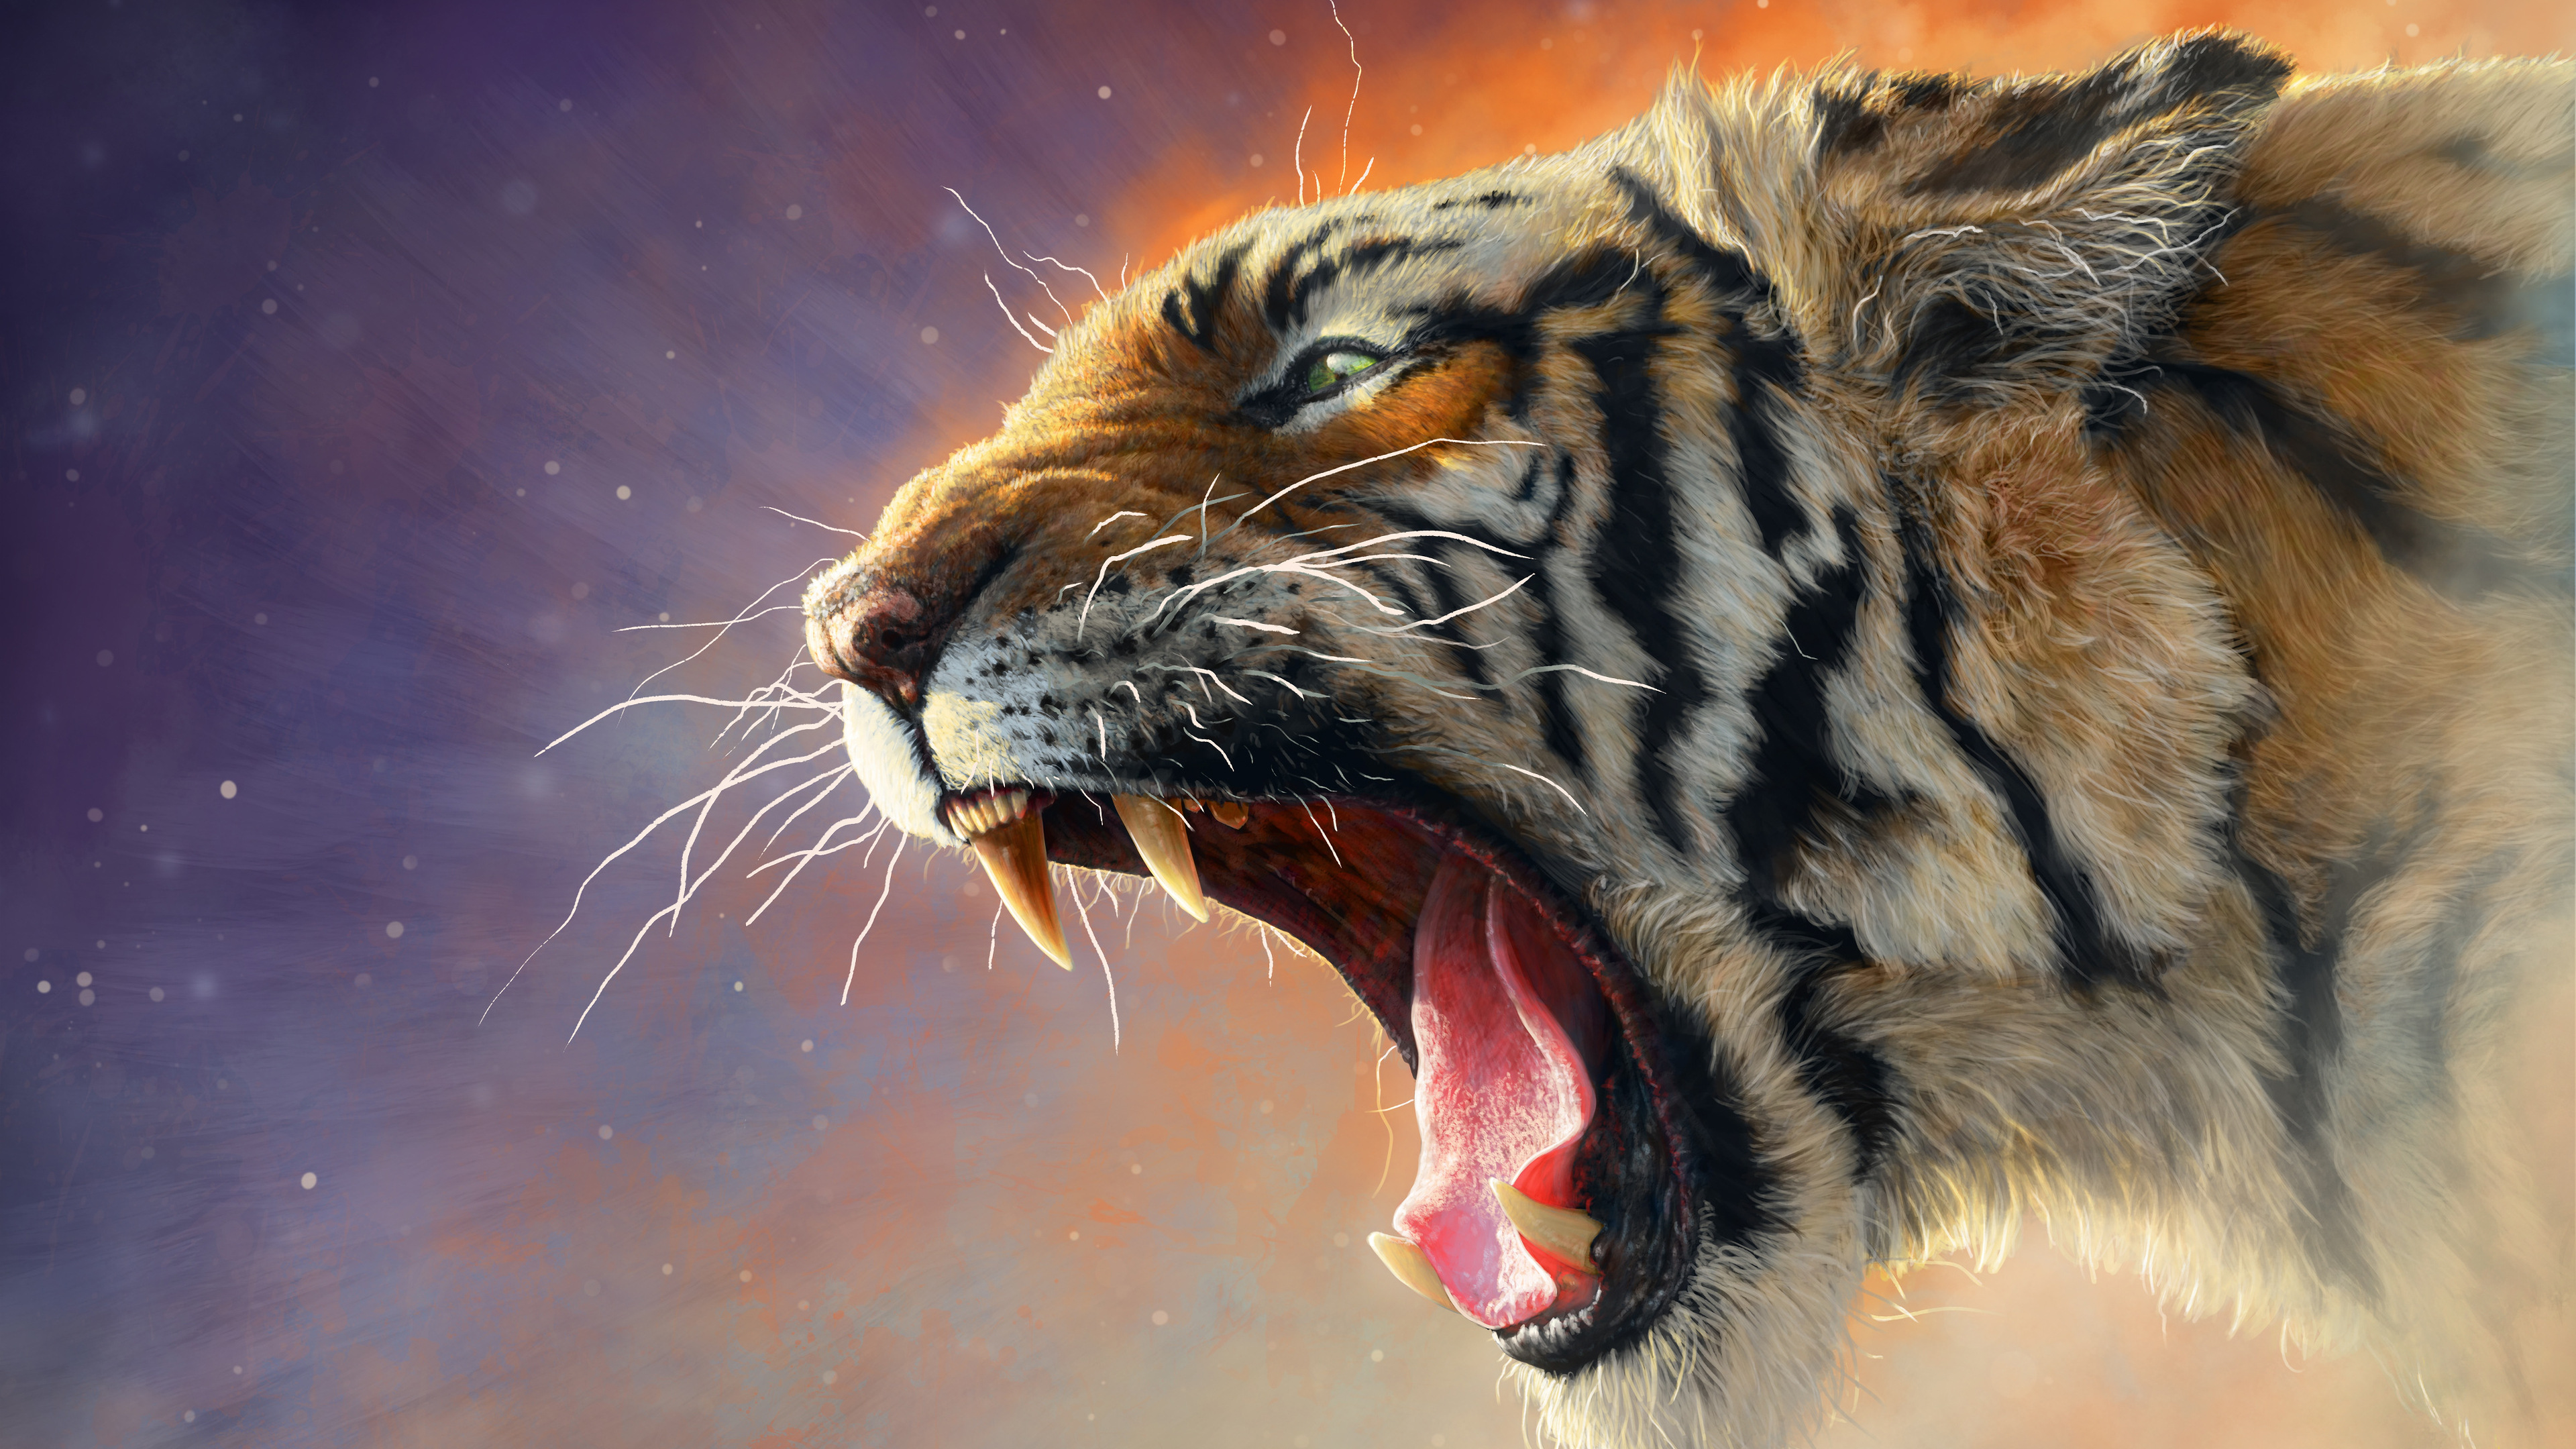 Tiger 4k Ultra HD Wallpaper Background Image